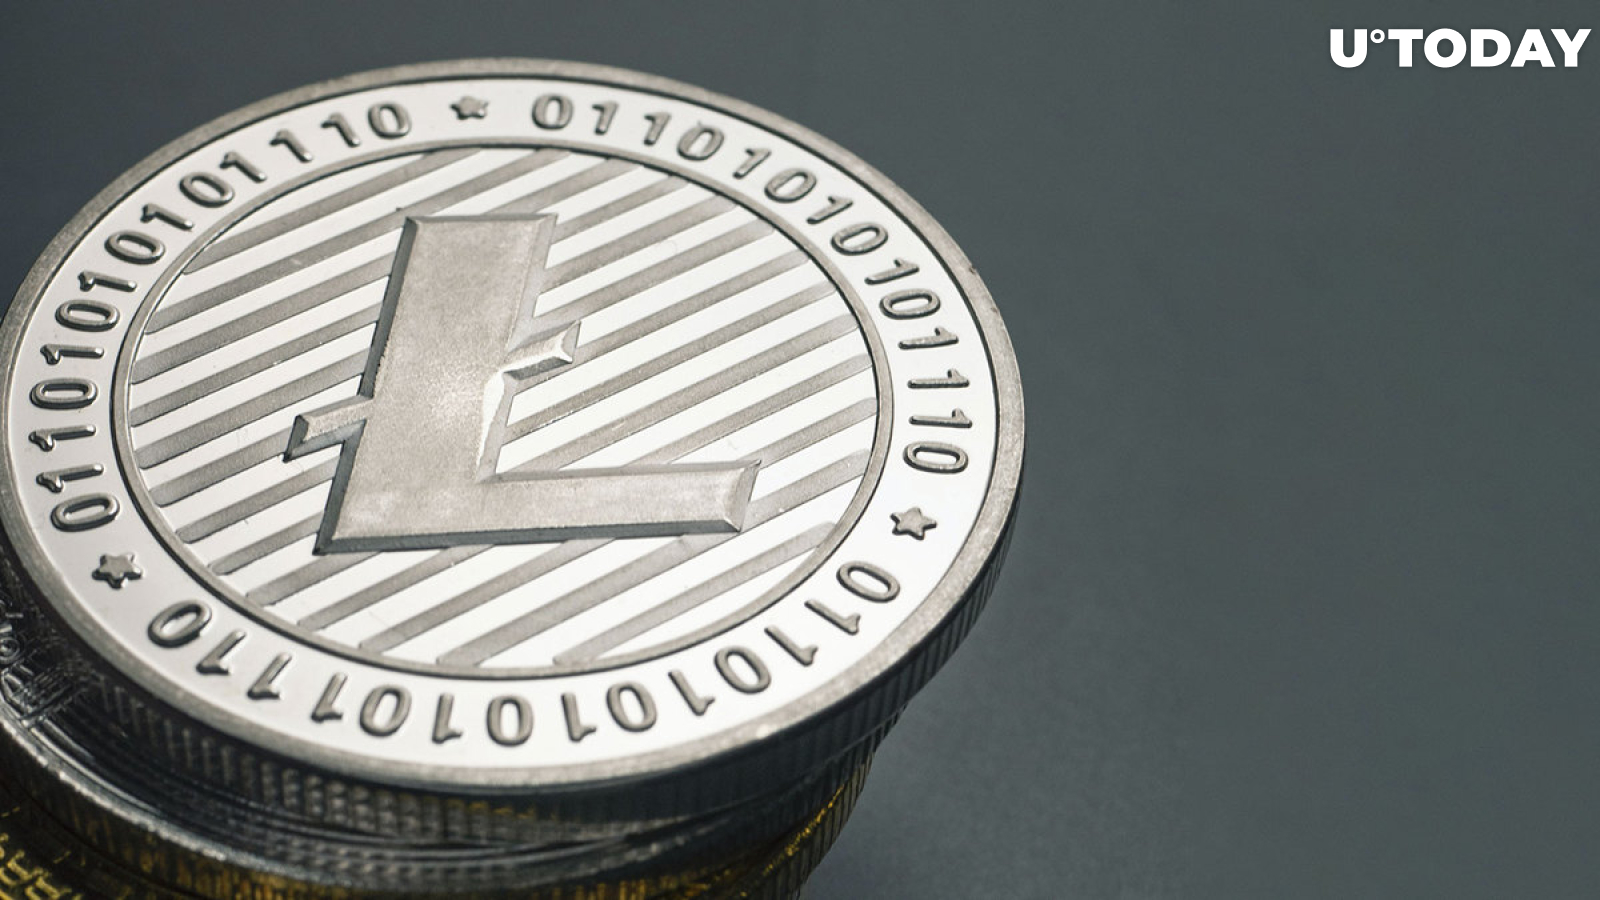 Litecoin (LTC) Hits Major Milestone Ahead of Upcoming Halving Event: Details